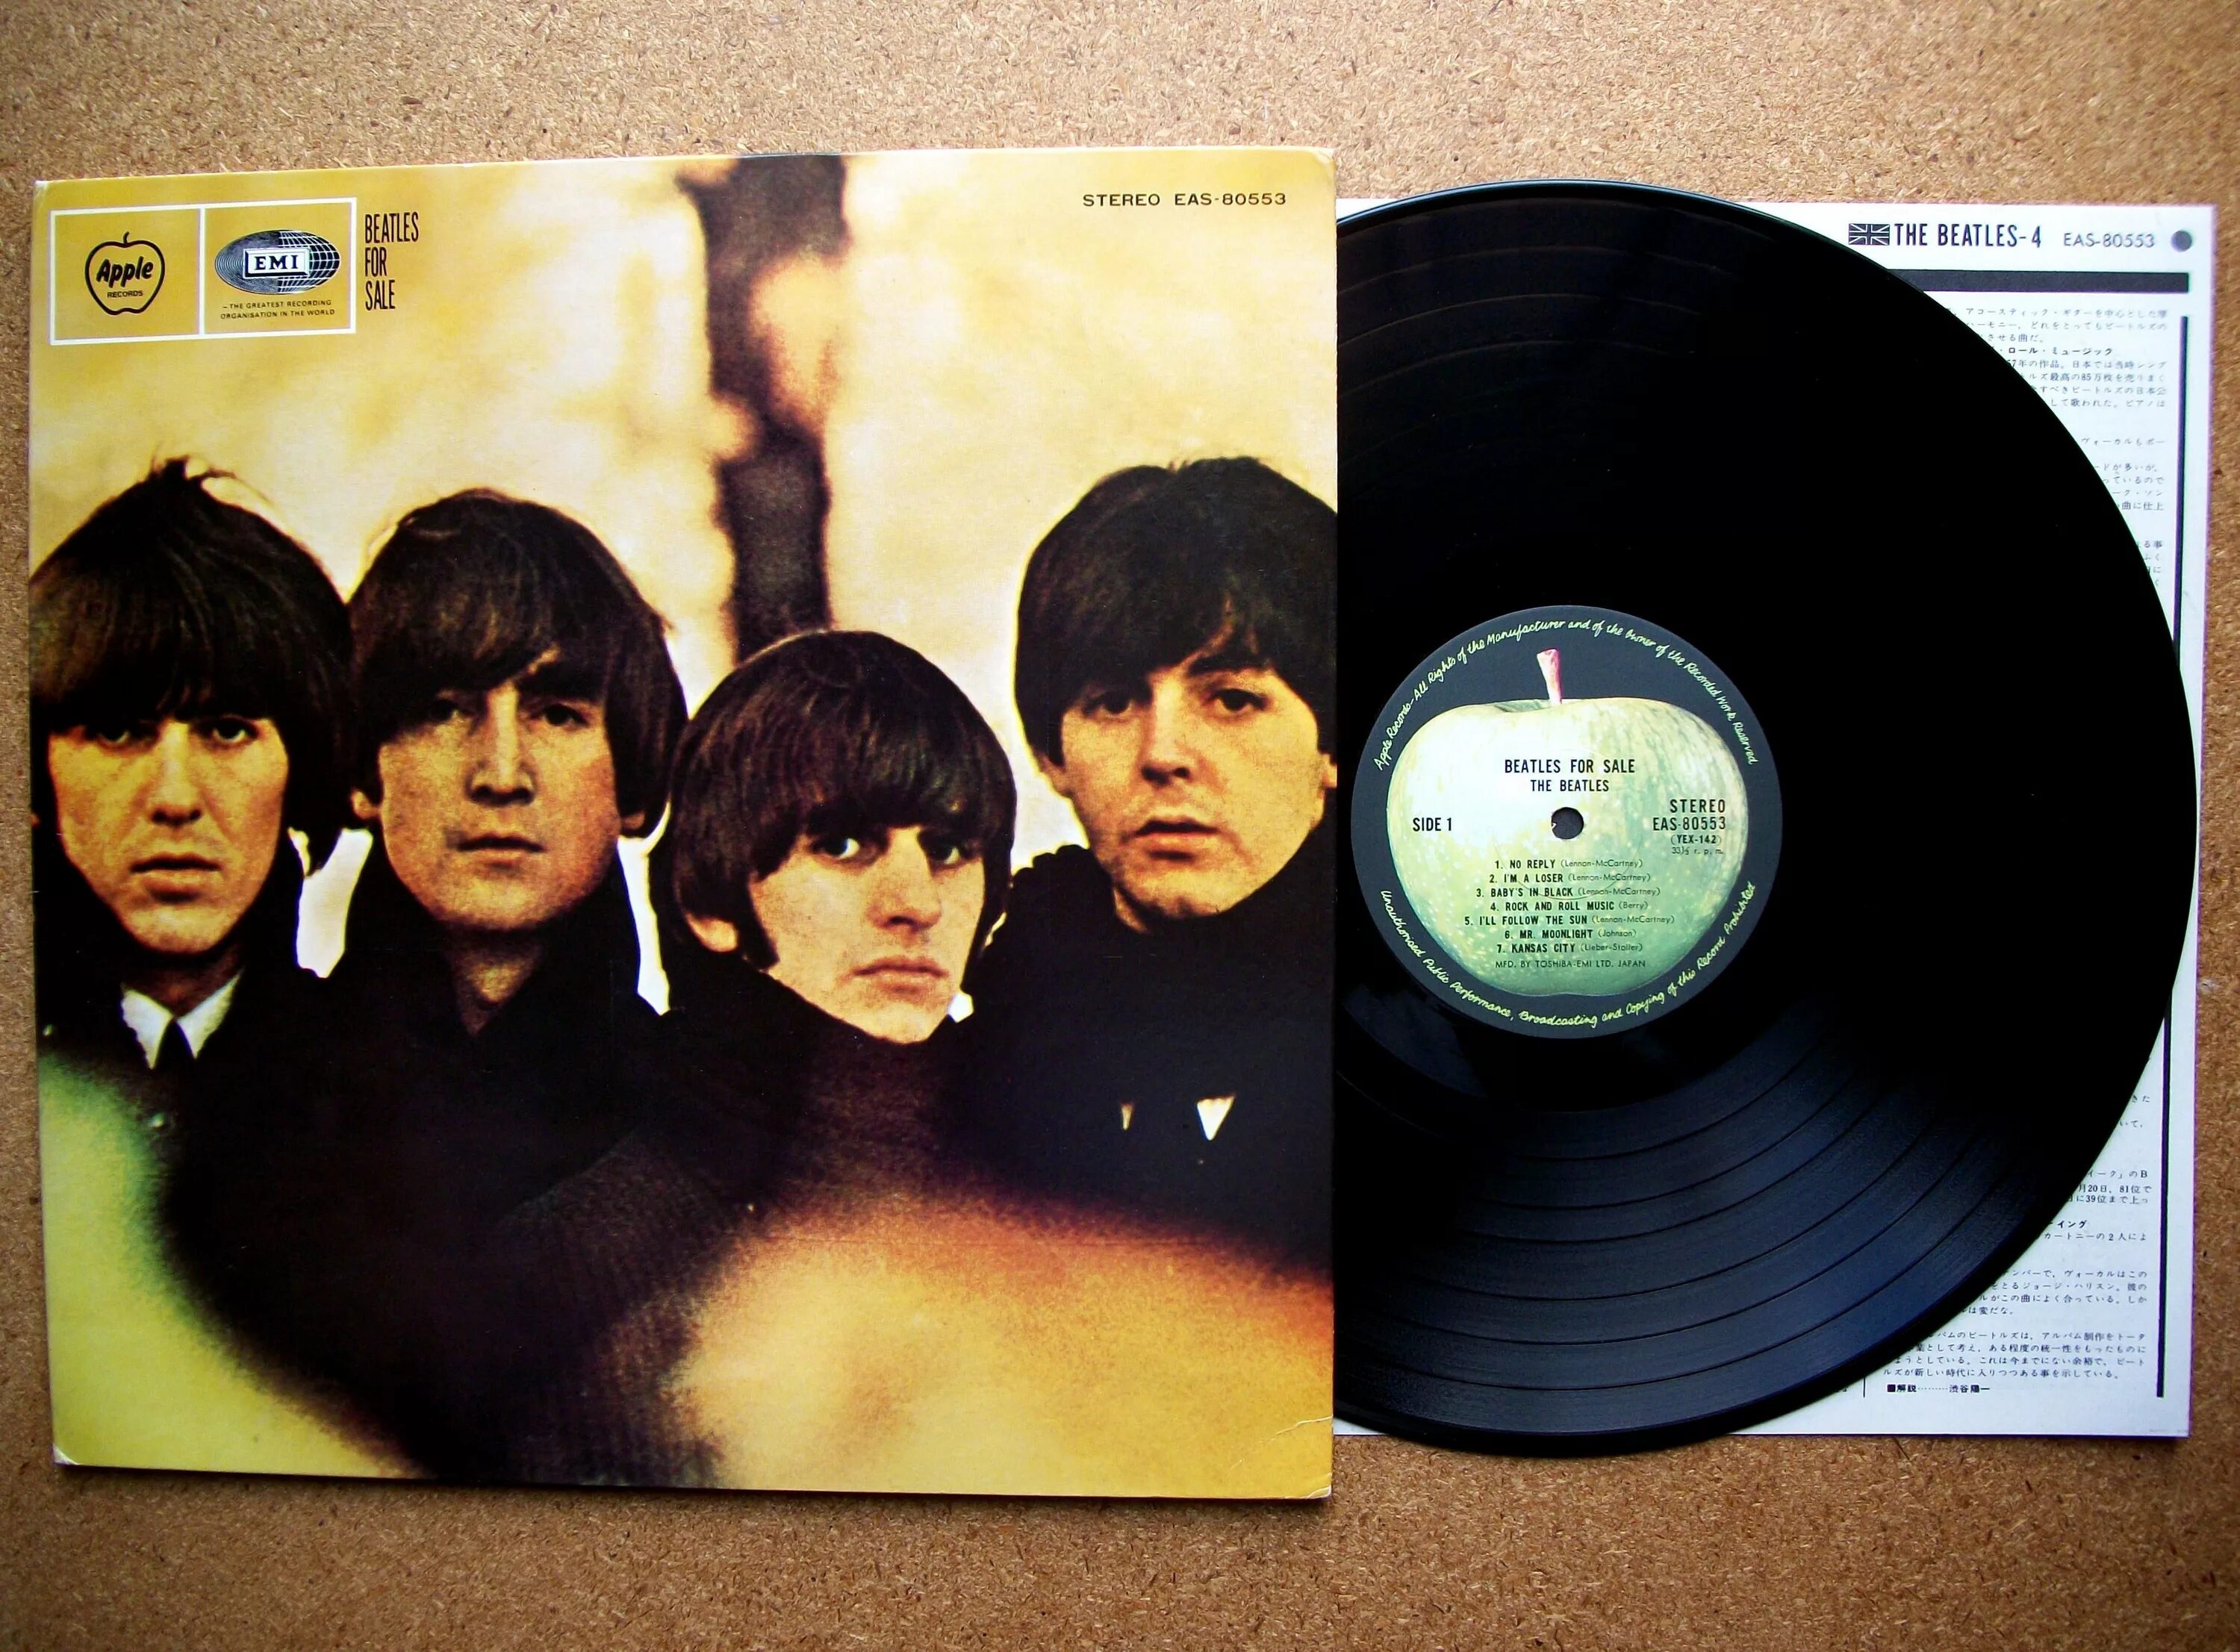 The Beatles Beatles for sale 1964. The Beatles 1964 альбом. Beatles for sale 1964. Обложка пластинки Beatles. Песни beatles слушать